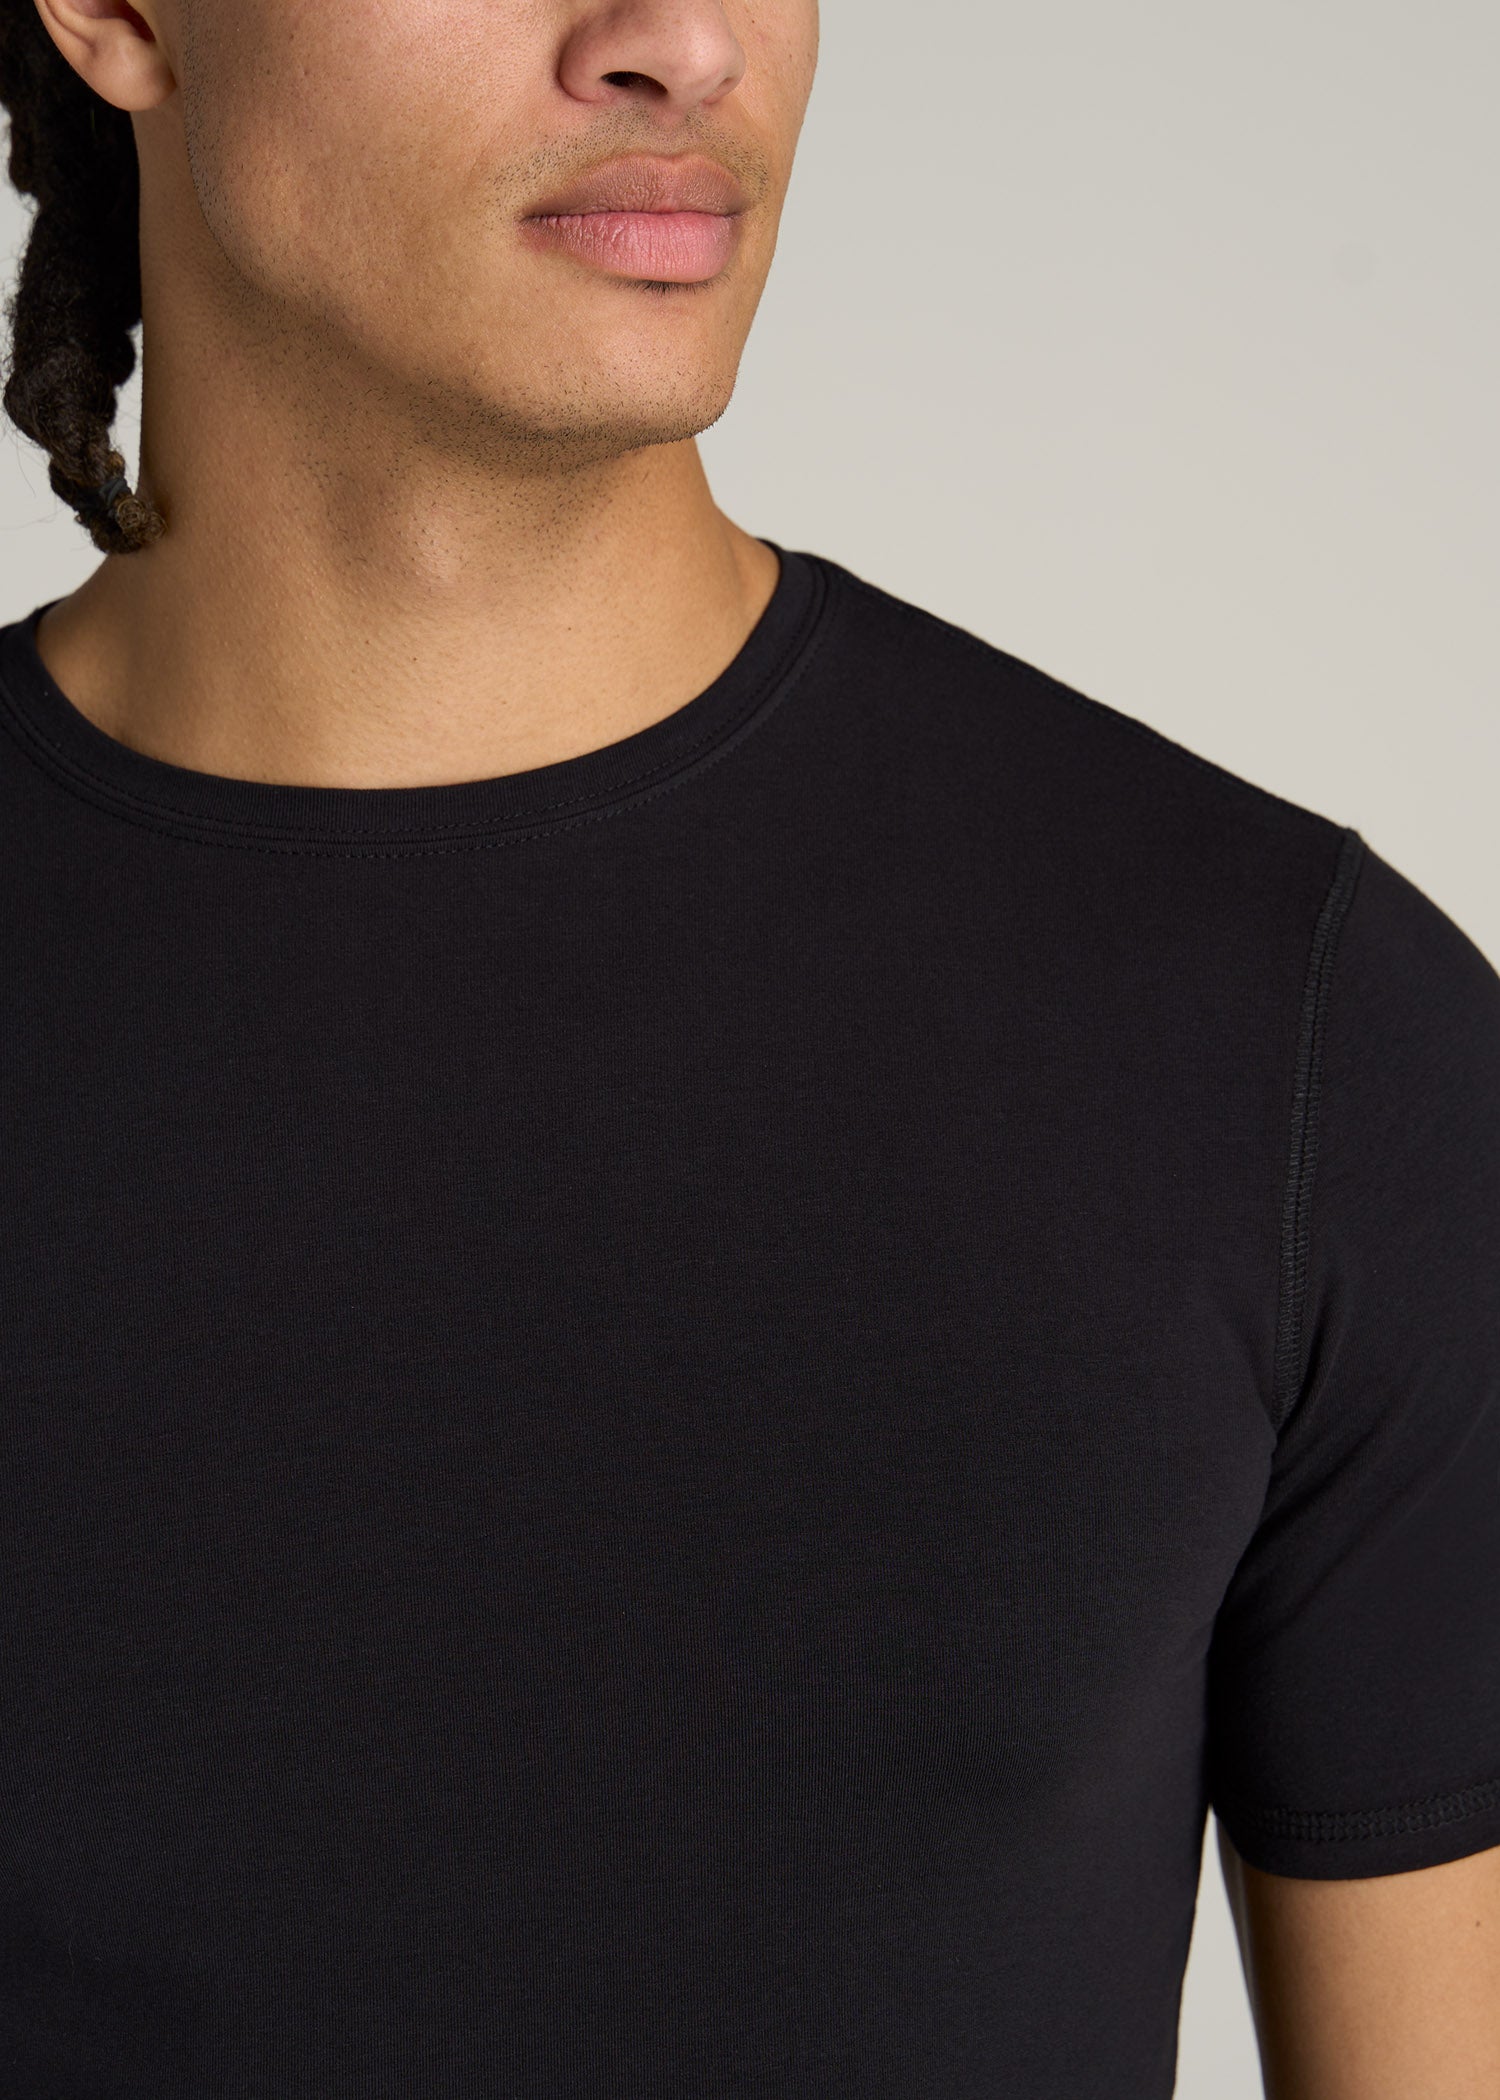 lemmer Serena afregning Slim Fit Black T-Shirt | Tall Men's Essentials | American Tall